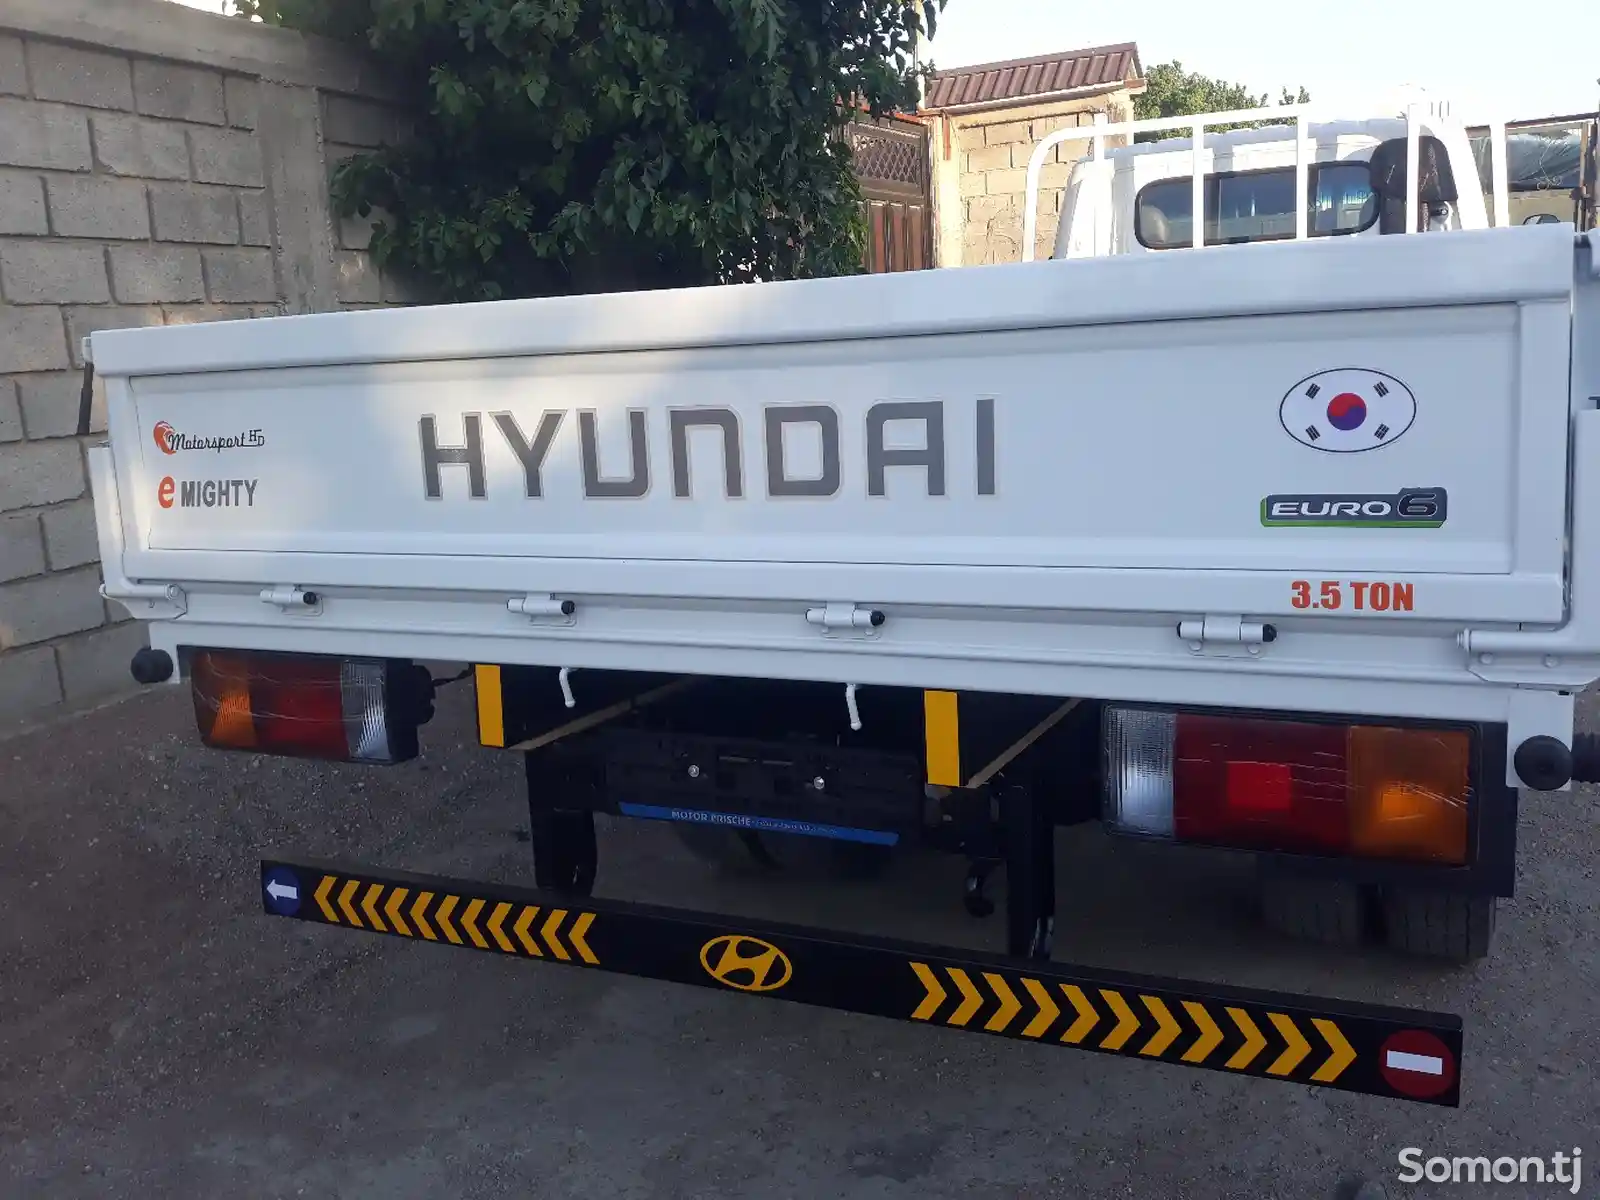 Бортовой автомобиль Hyundai Maghty, 2014-15